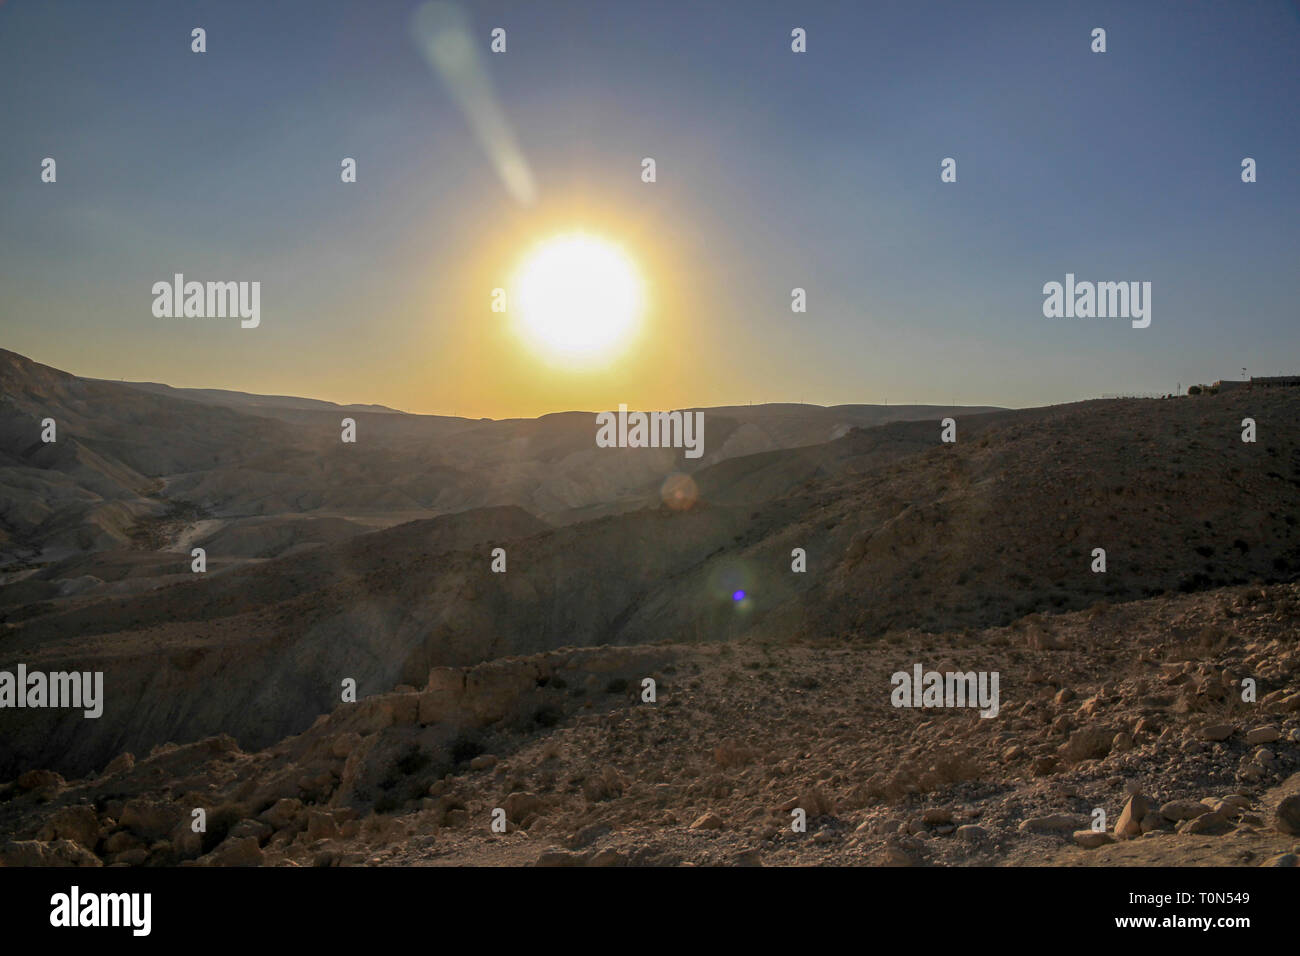 Desert sunset fotografiado en Israel, el desierto del Negev Foto de stock